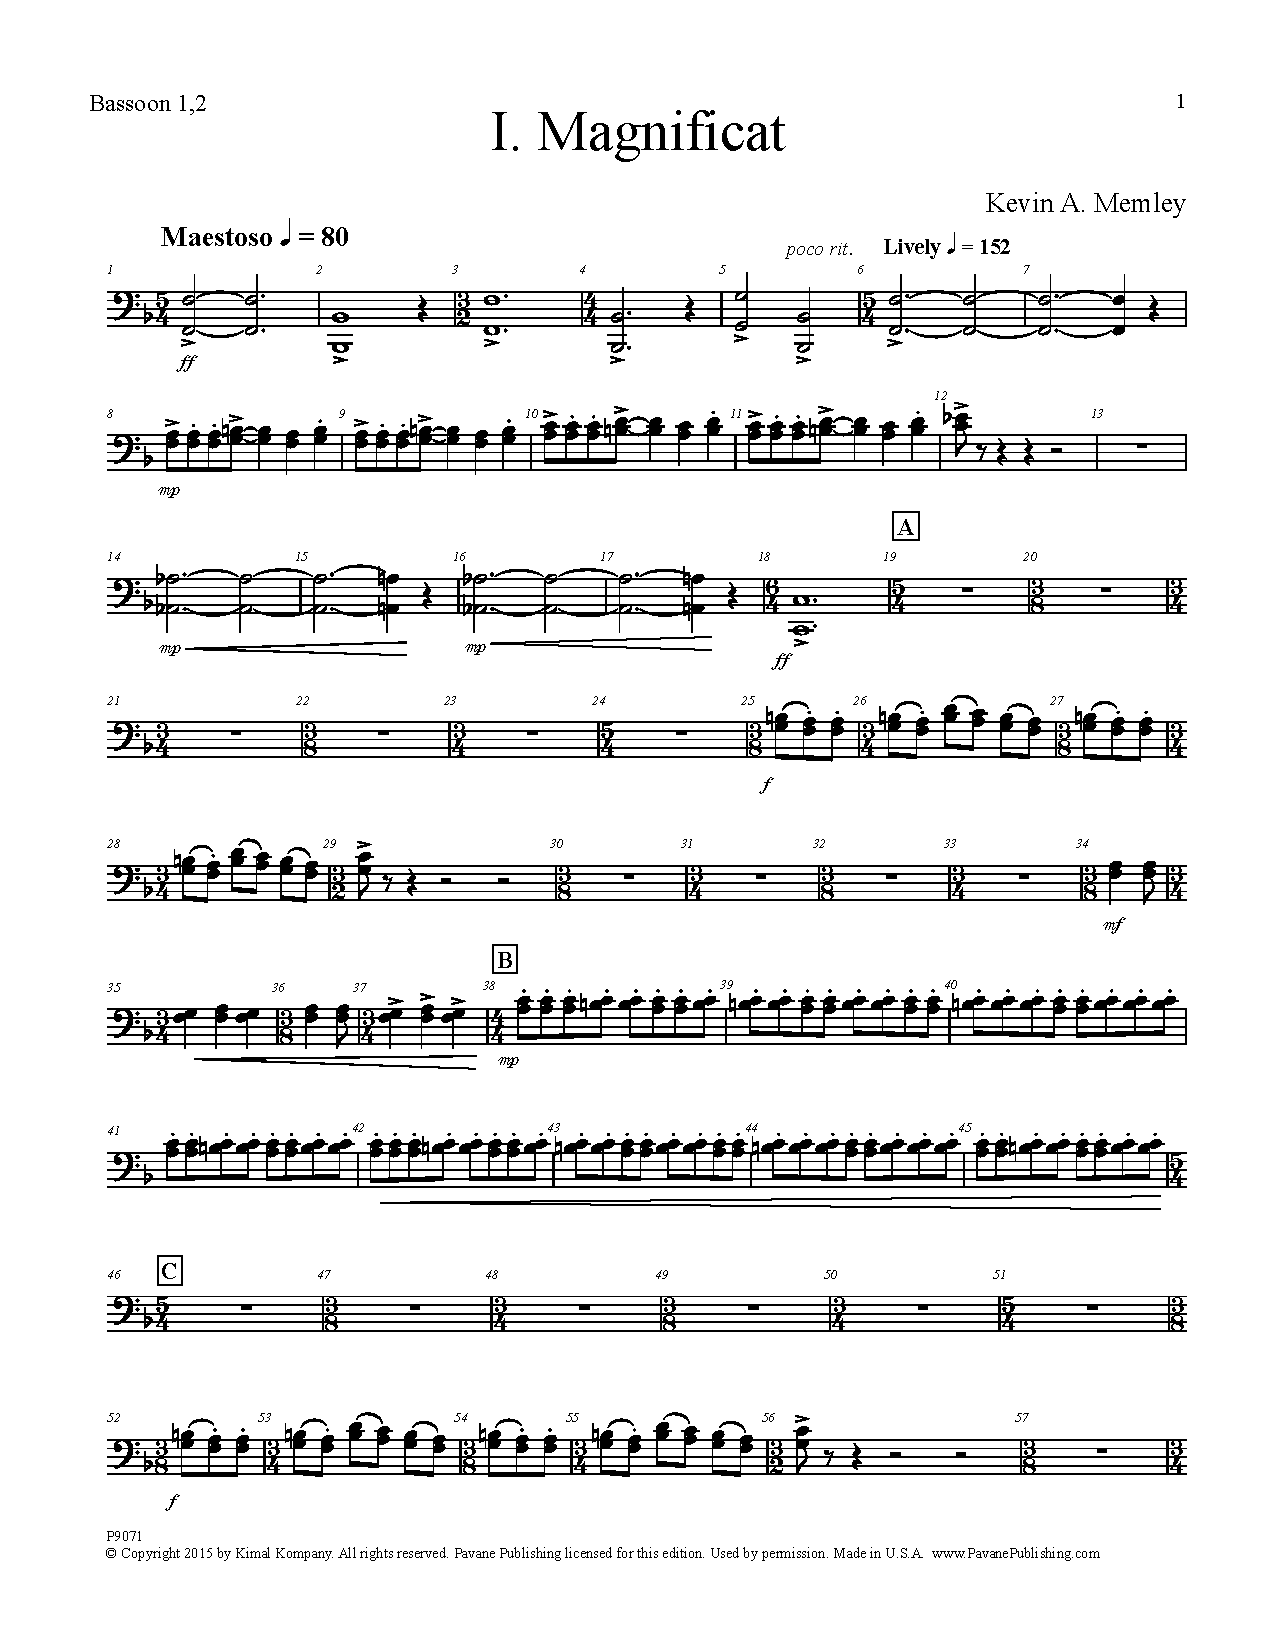 Download Kevin A. Memley Magnificat - Bassoon 1, 2 Sheet Music